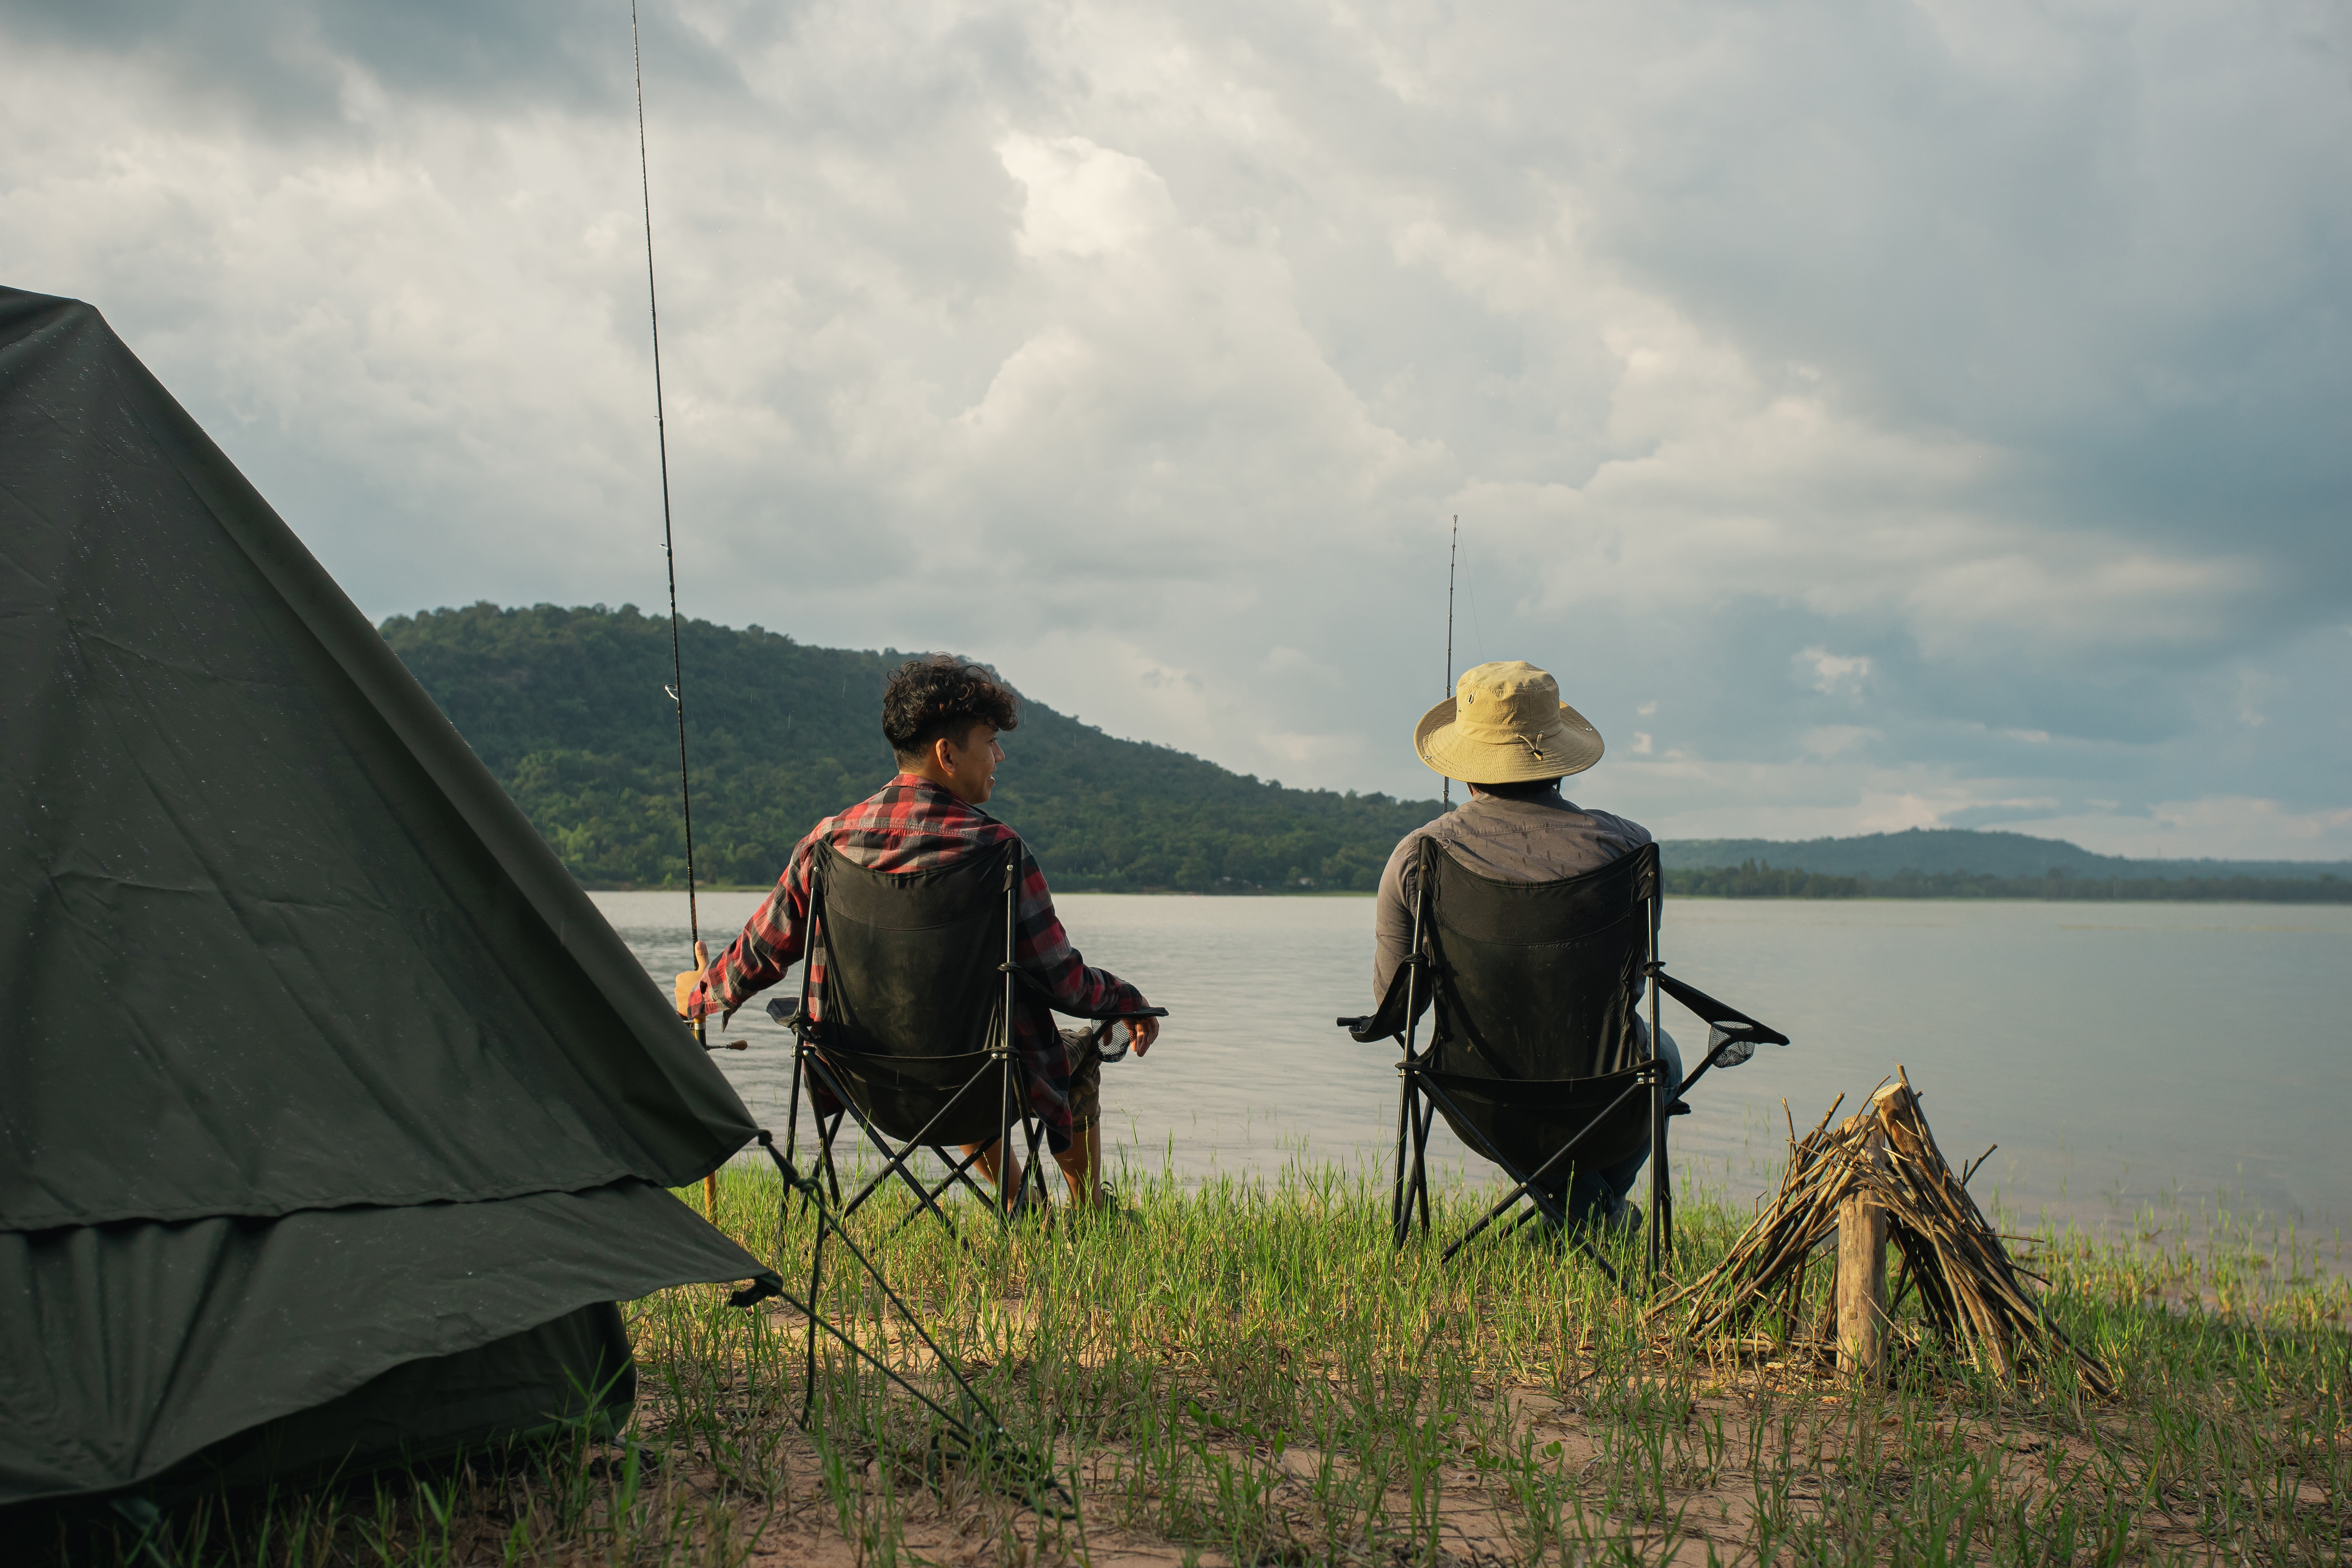 Two men fishing by a lake | Source: Shutterstock